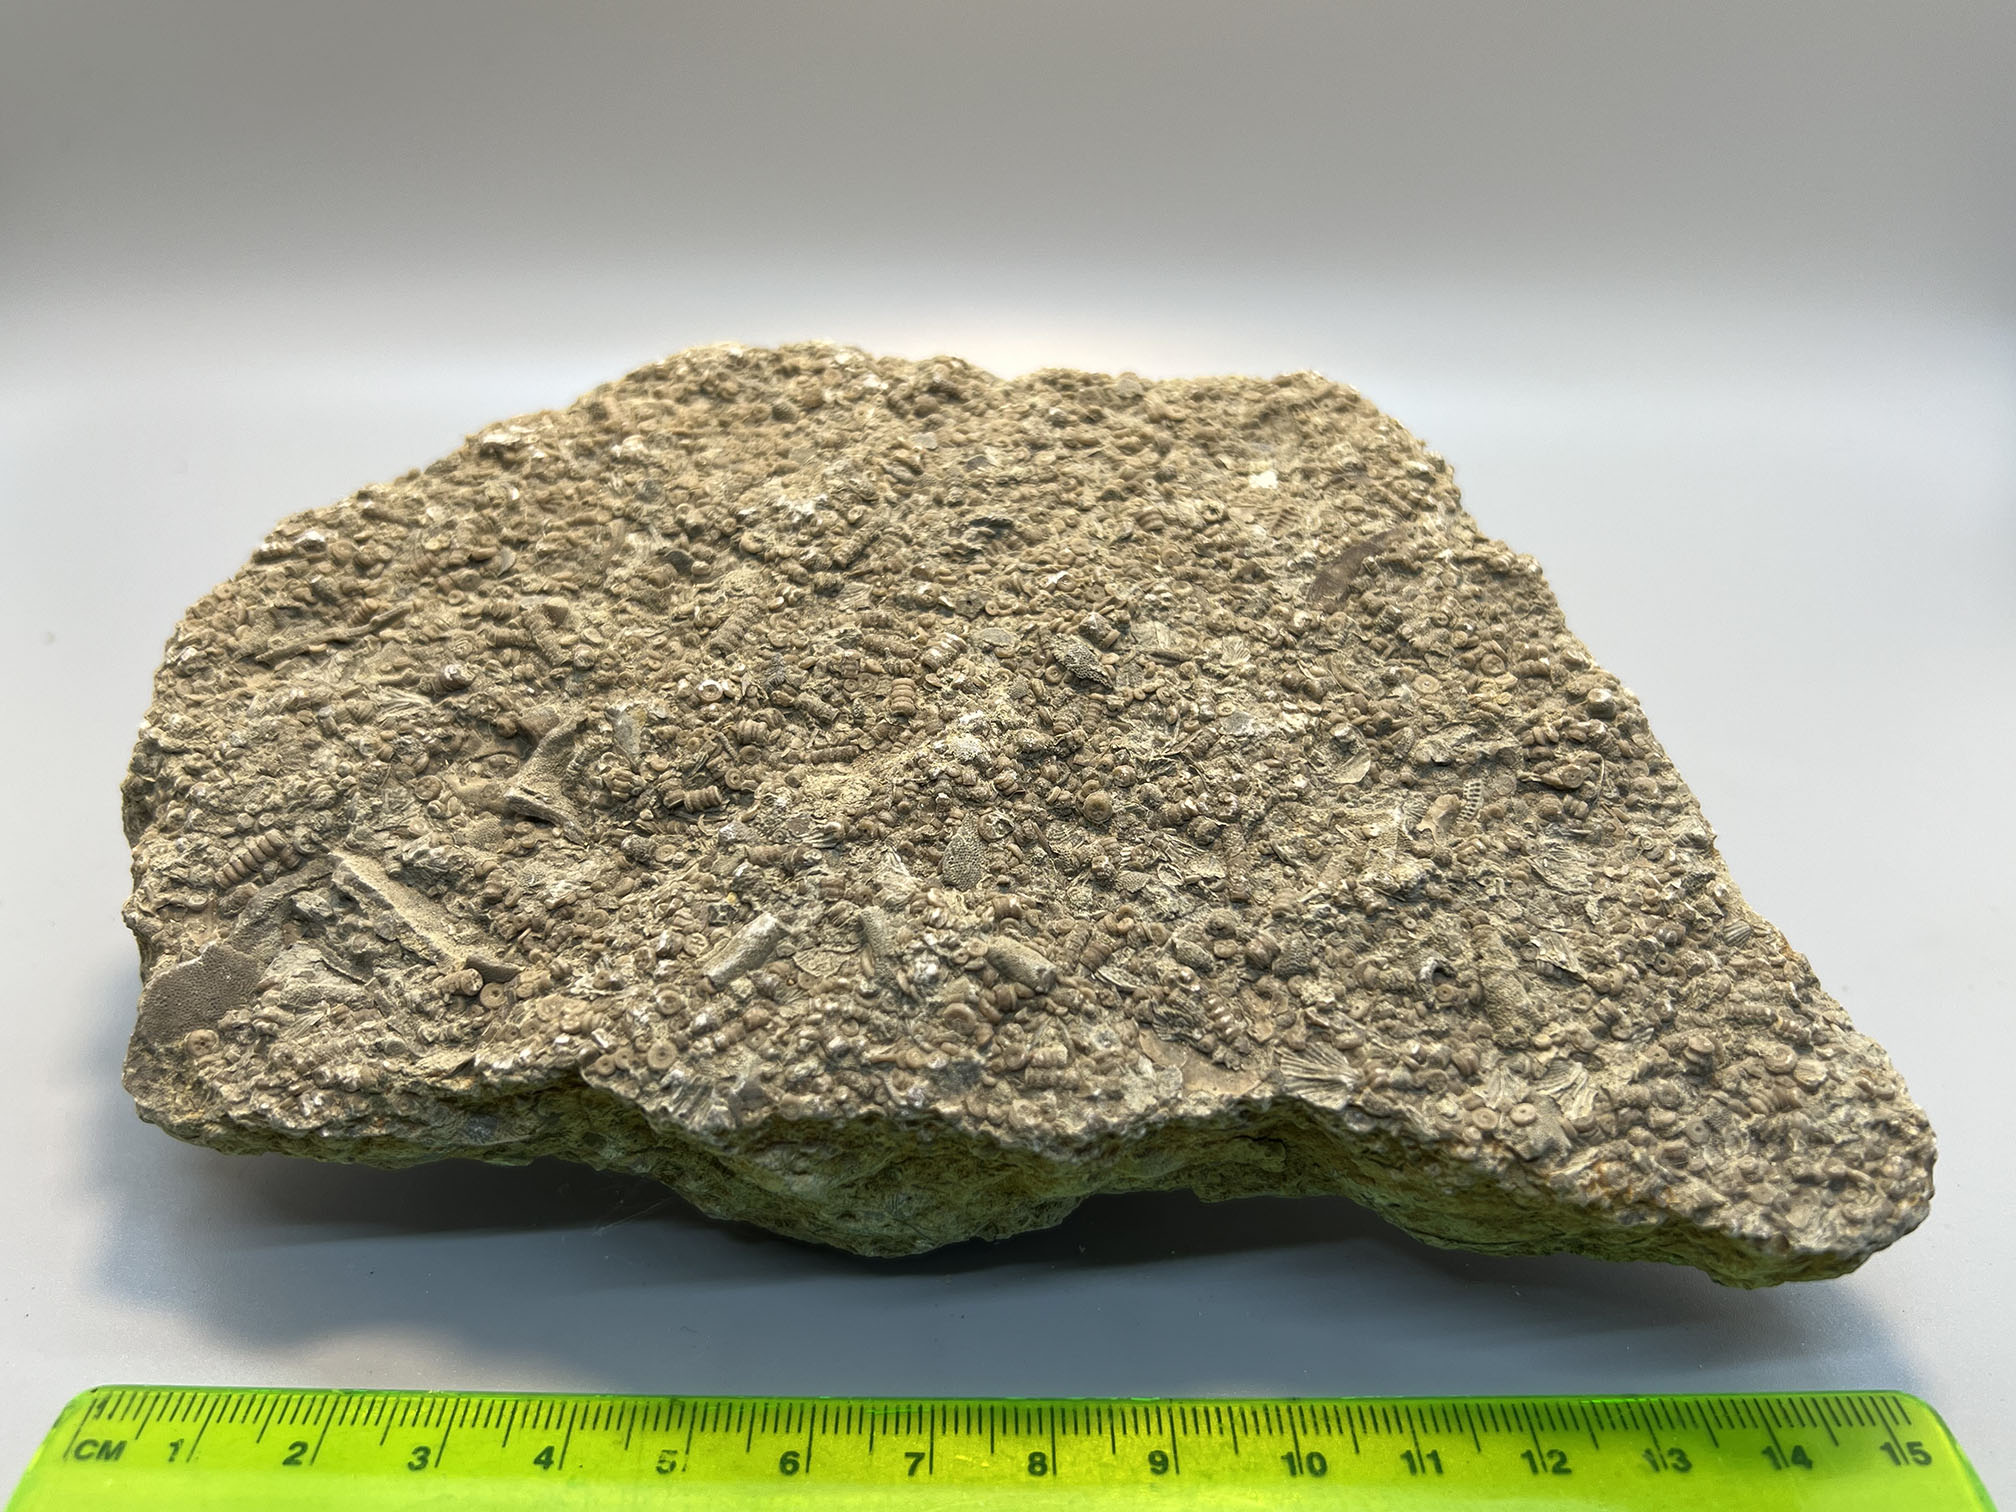 Limestone crinoidal